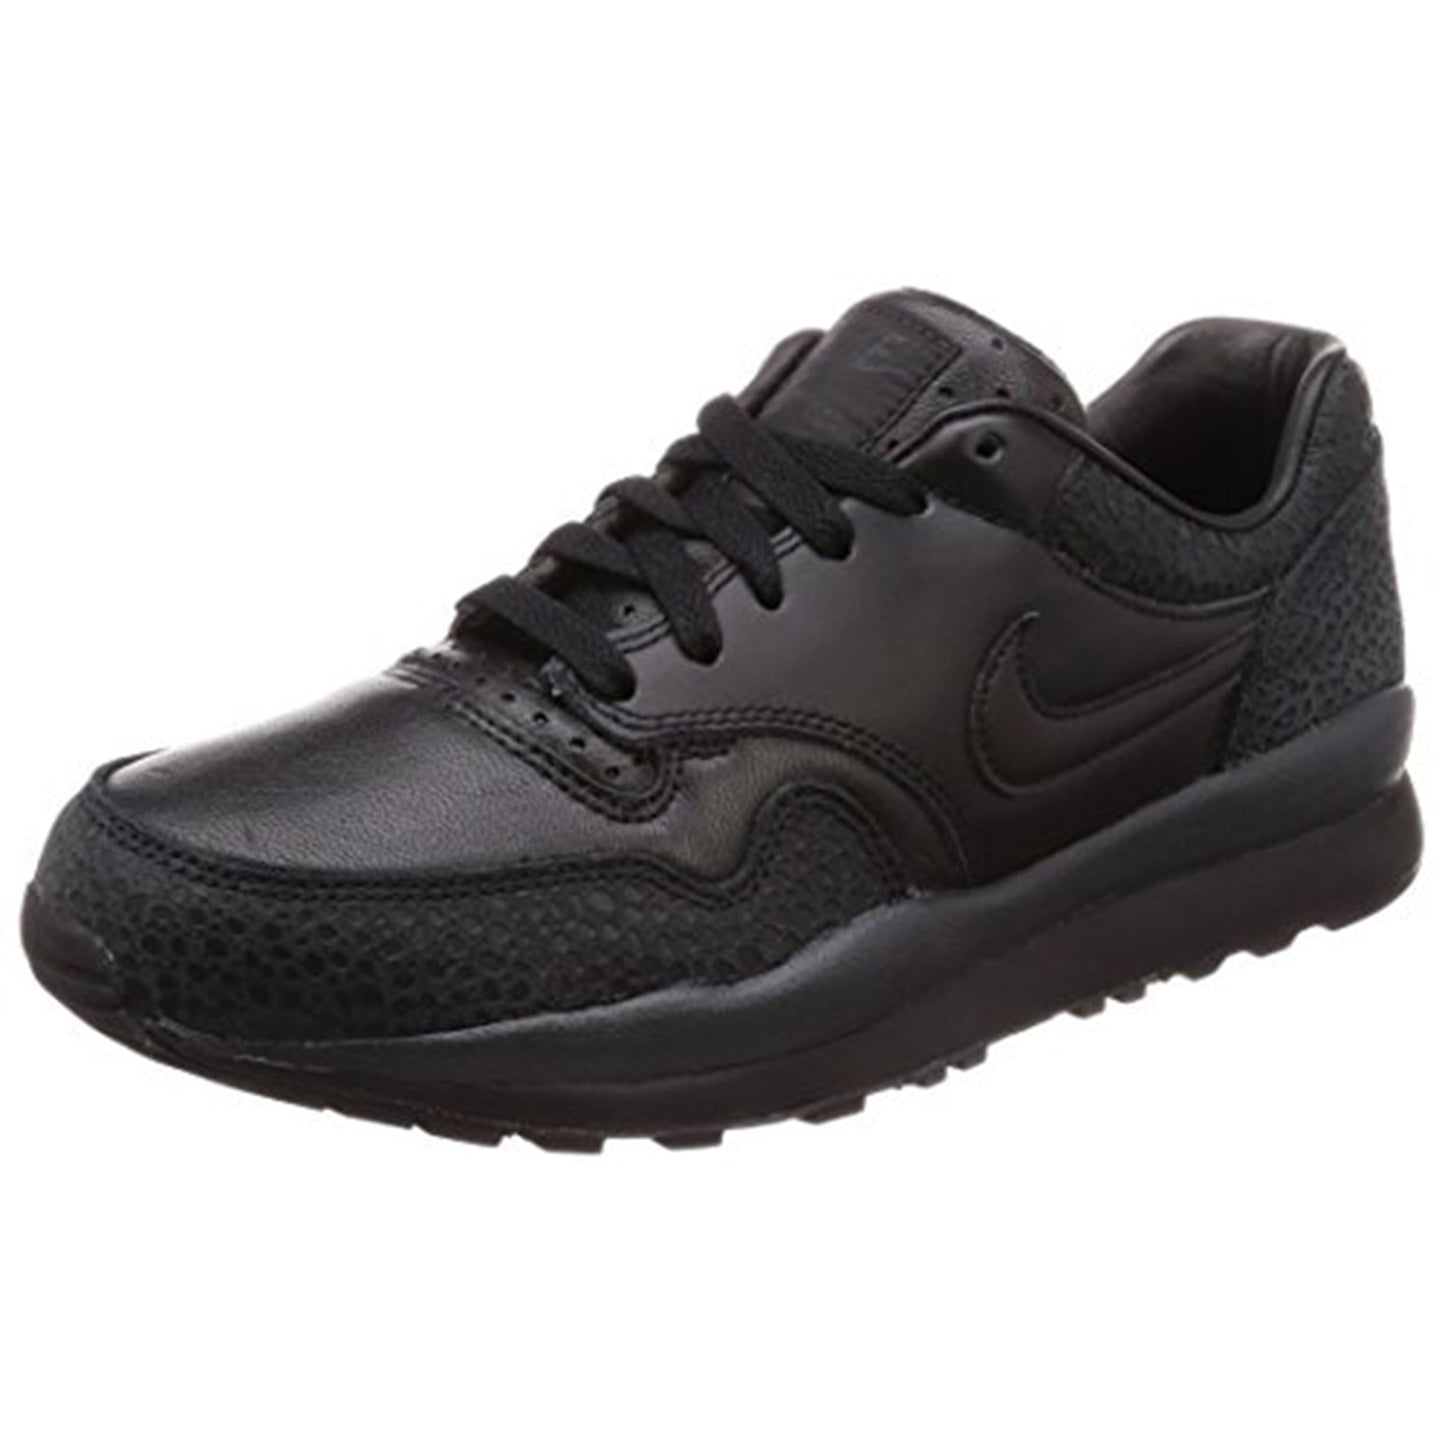 Nike Men's Air Safari QS Size 11 AO3295-002 Black/Anthracite